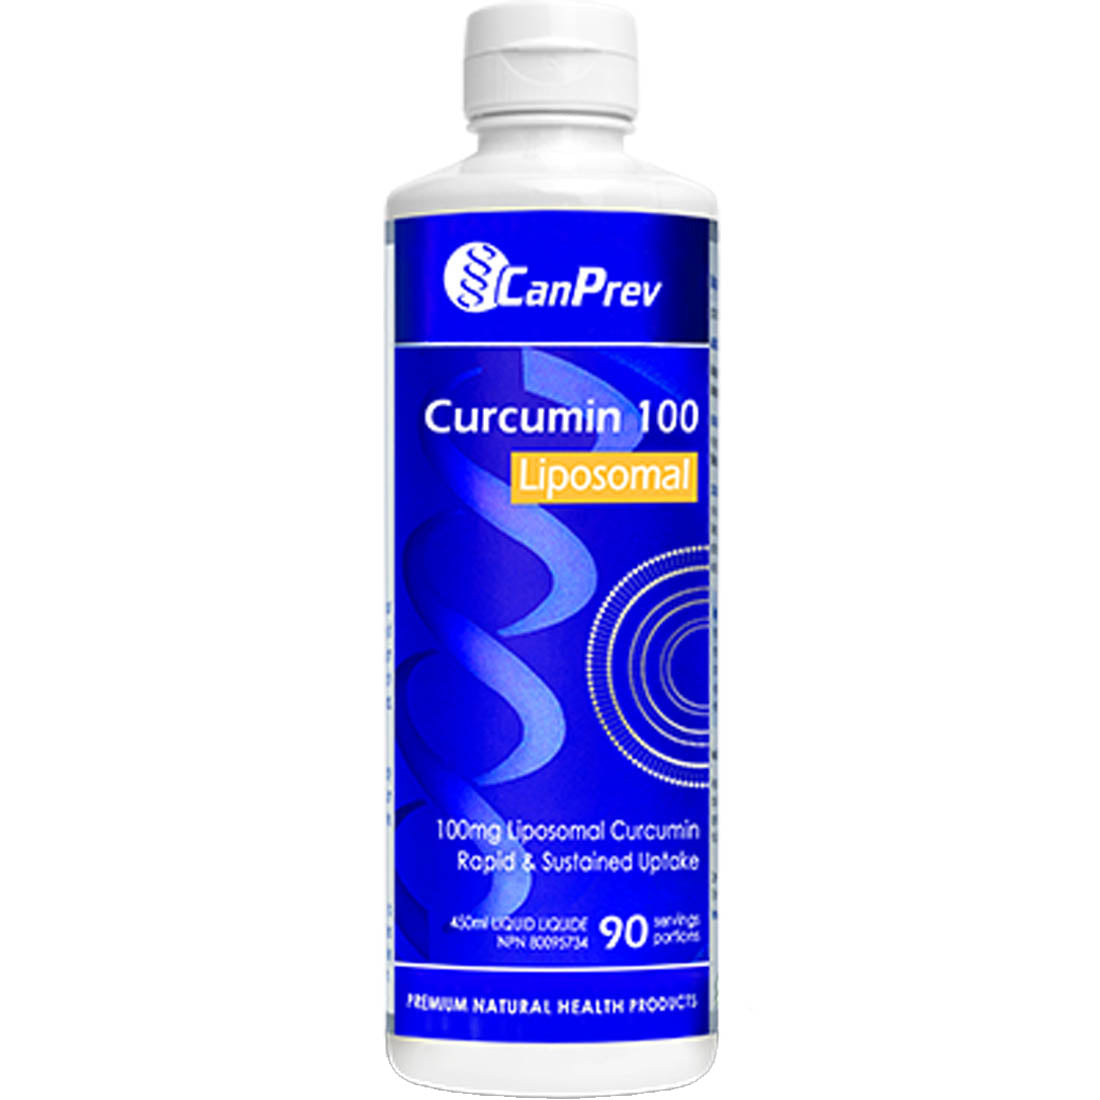 CanPrev Liposomal Curcumin 100mg, Rapid and Sustained Uptake